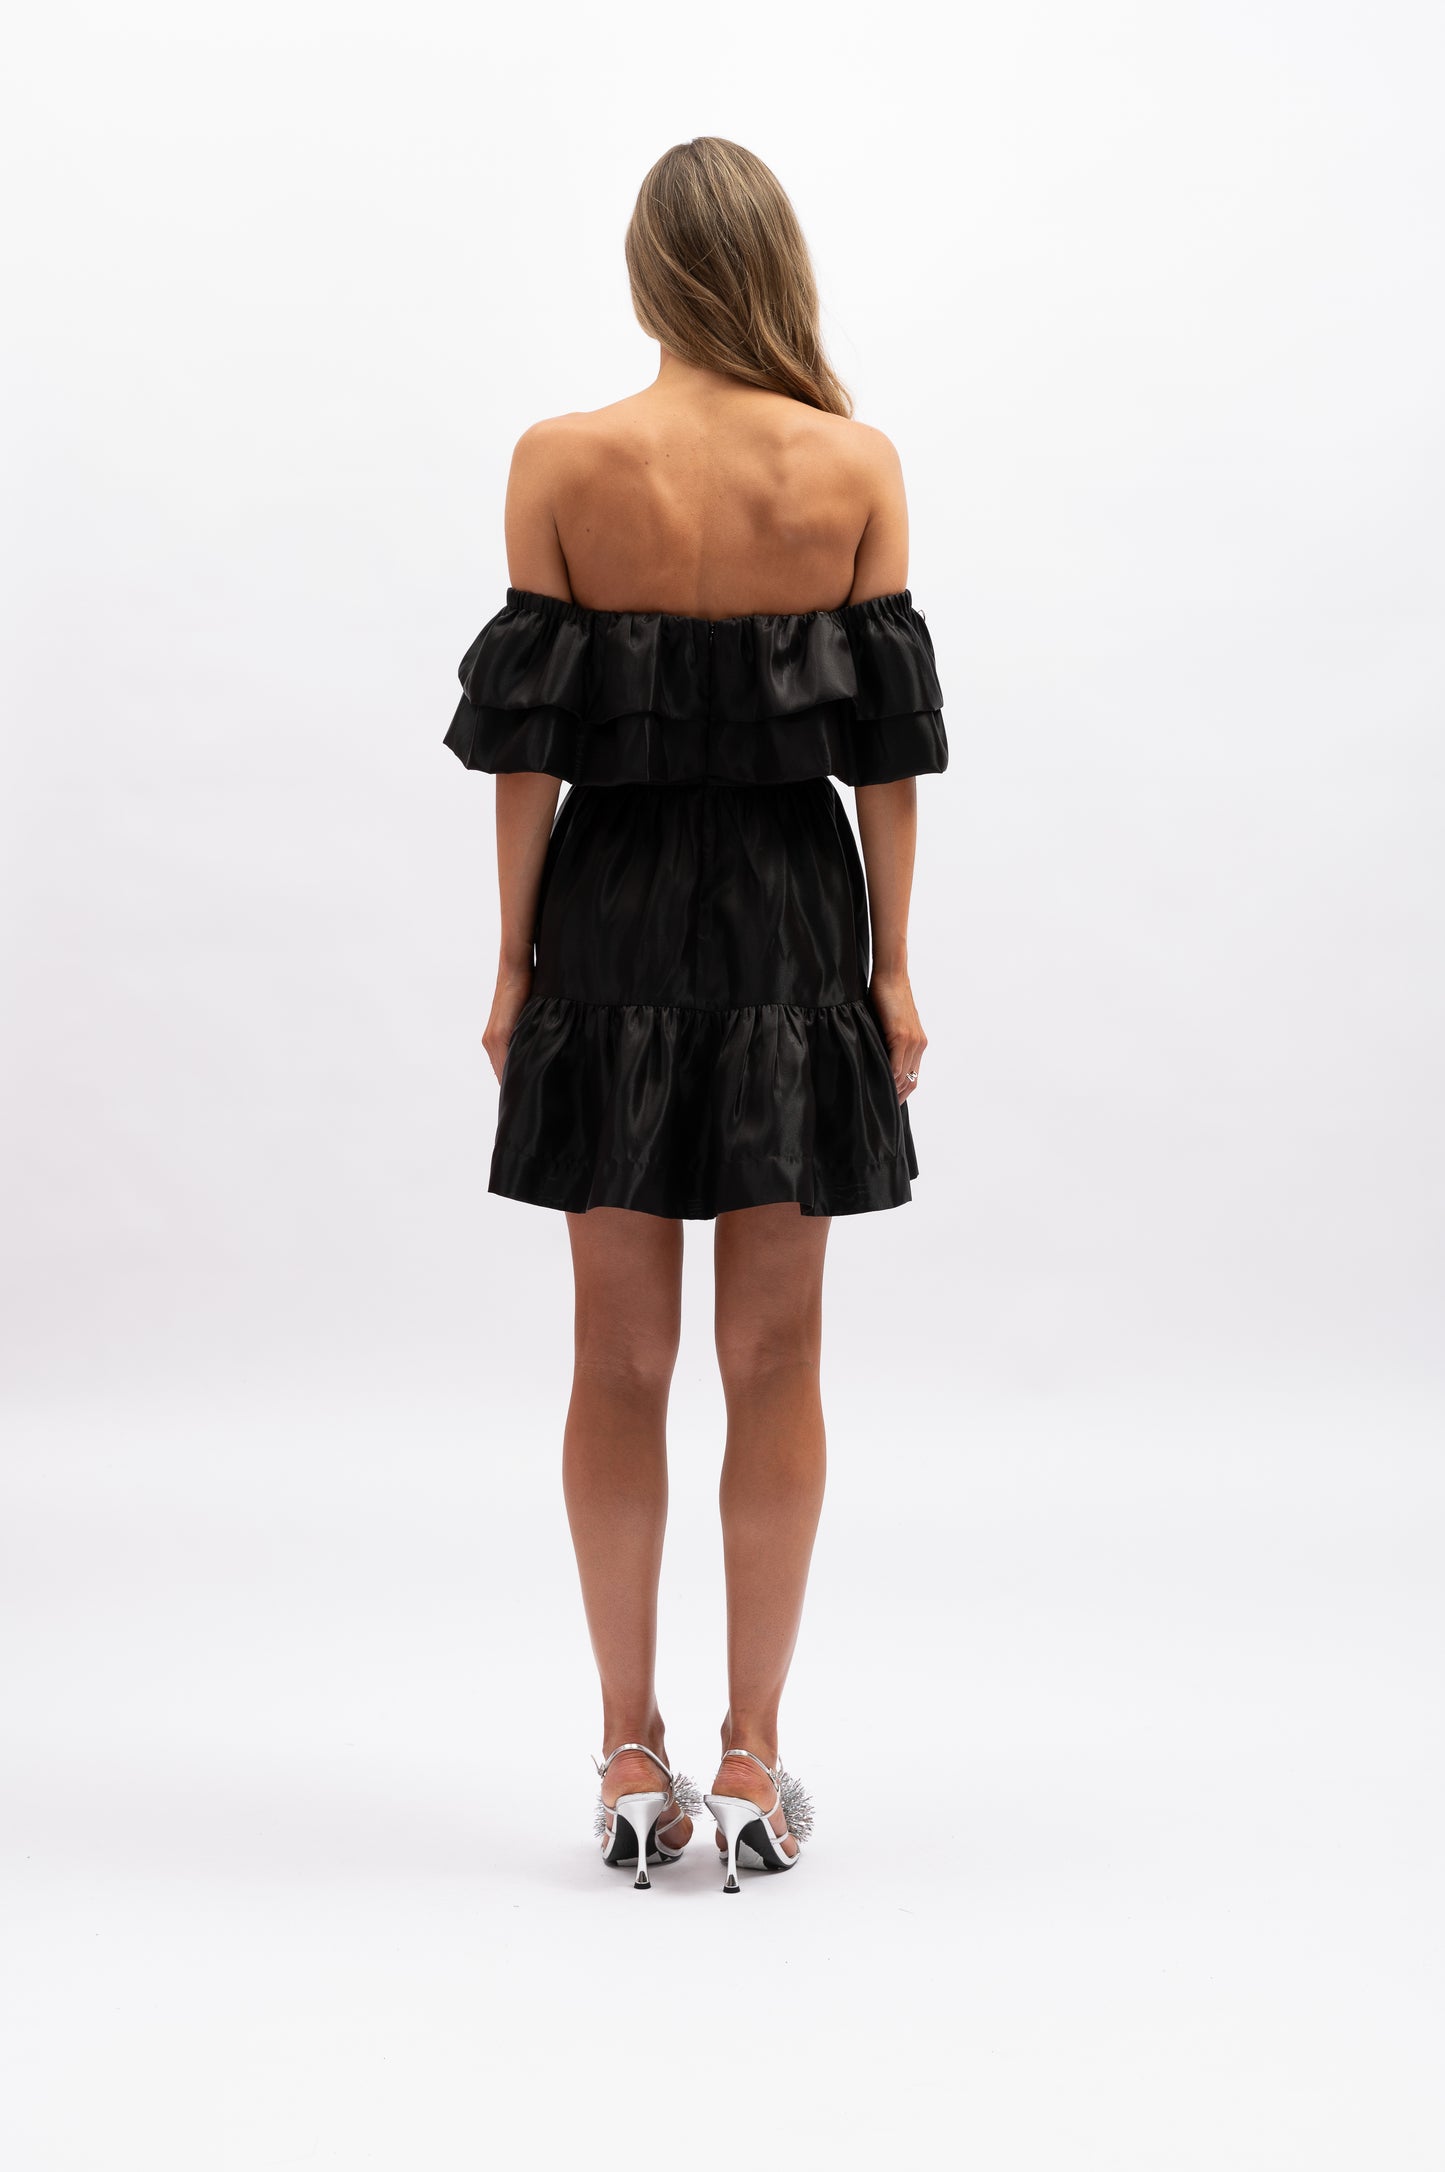 Lyla Mini Dress - Black - off the shoulder black mini dress with ruffles - Aureta